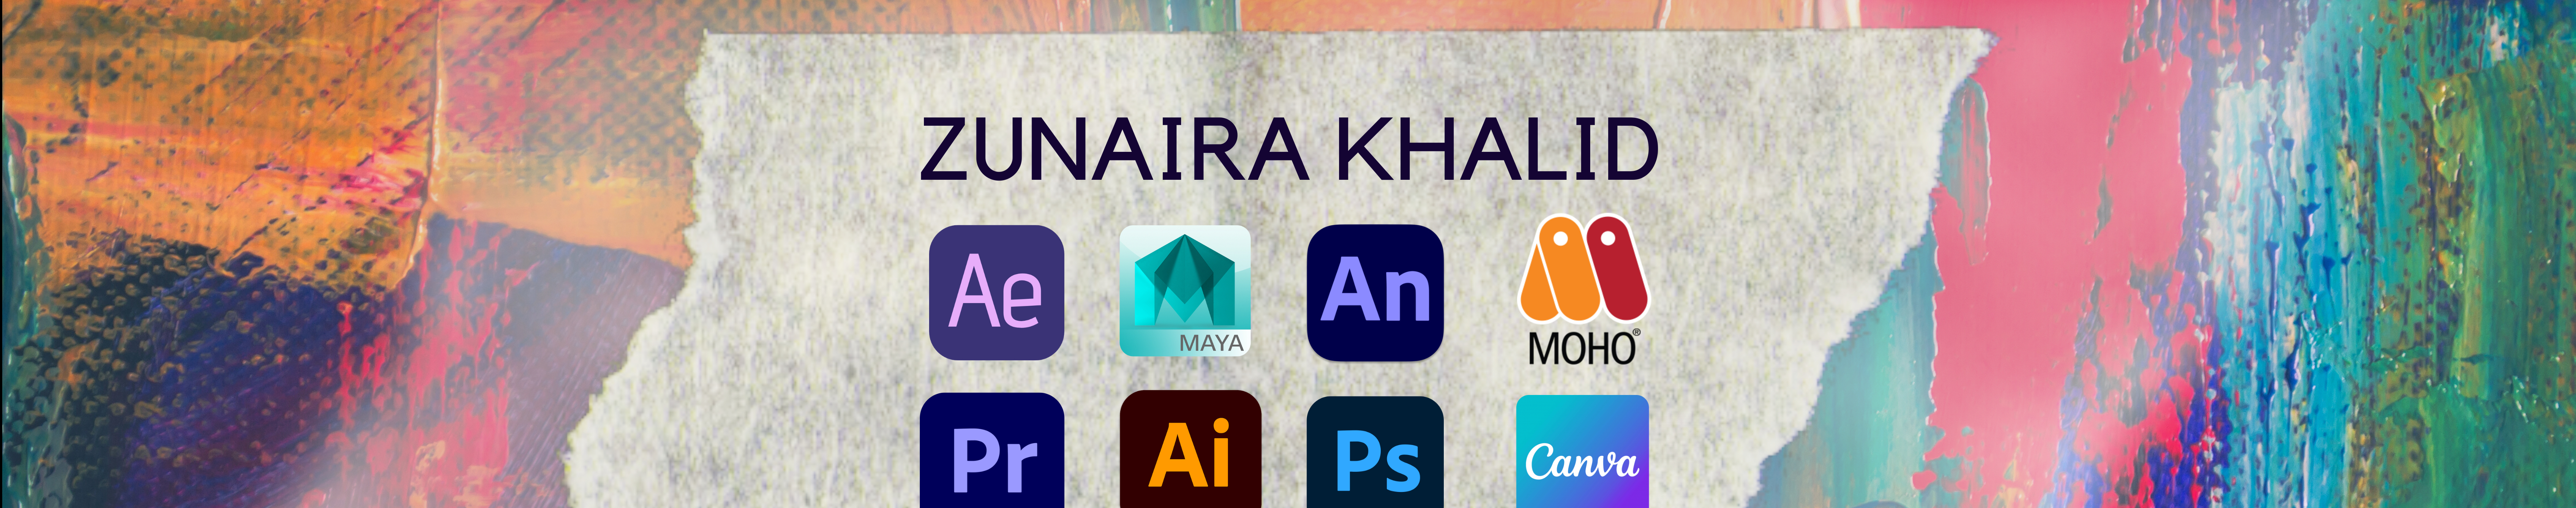 zunaira khalid's profile banner